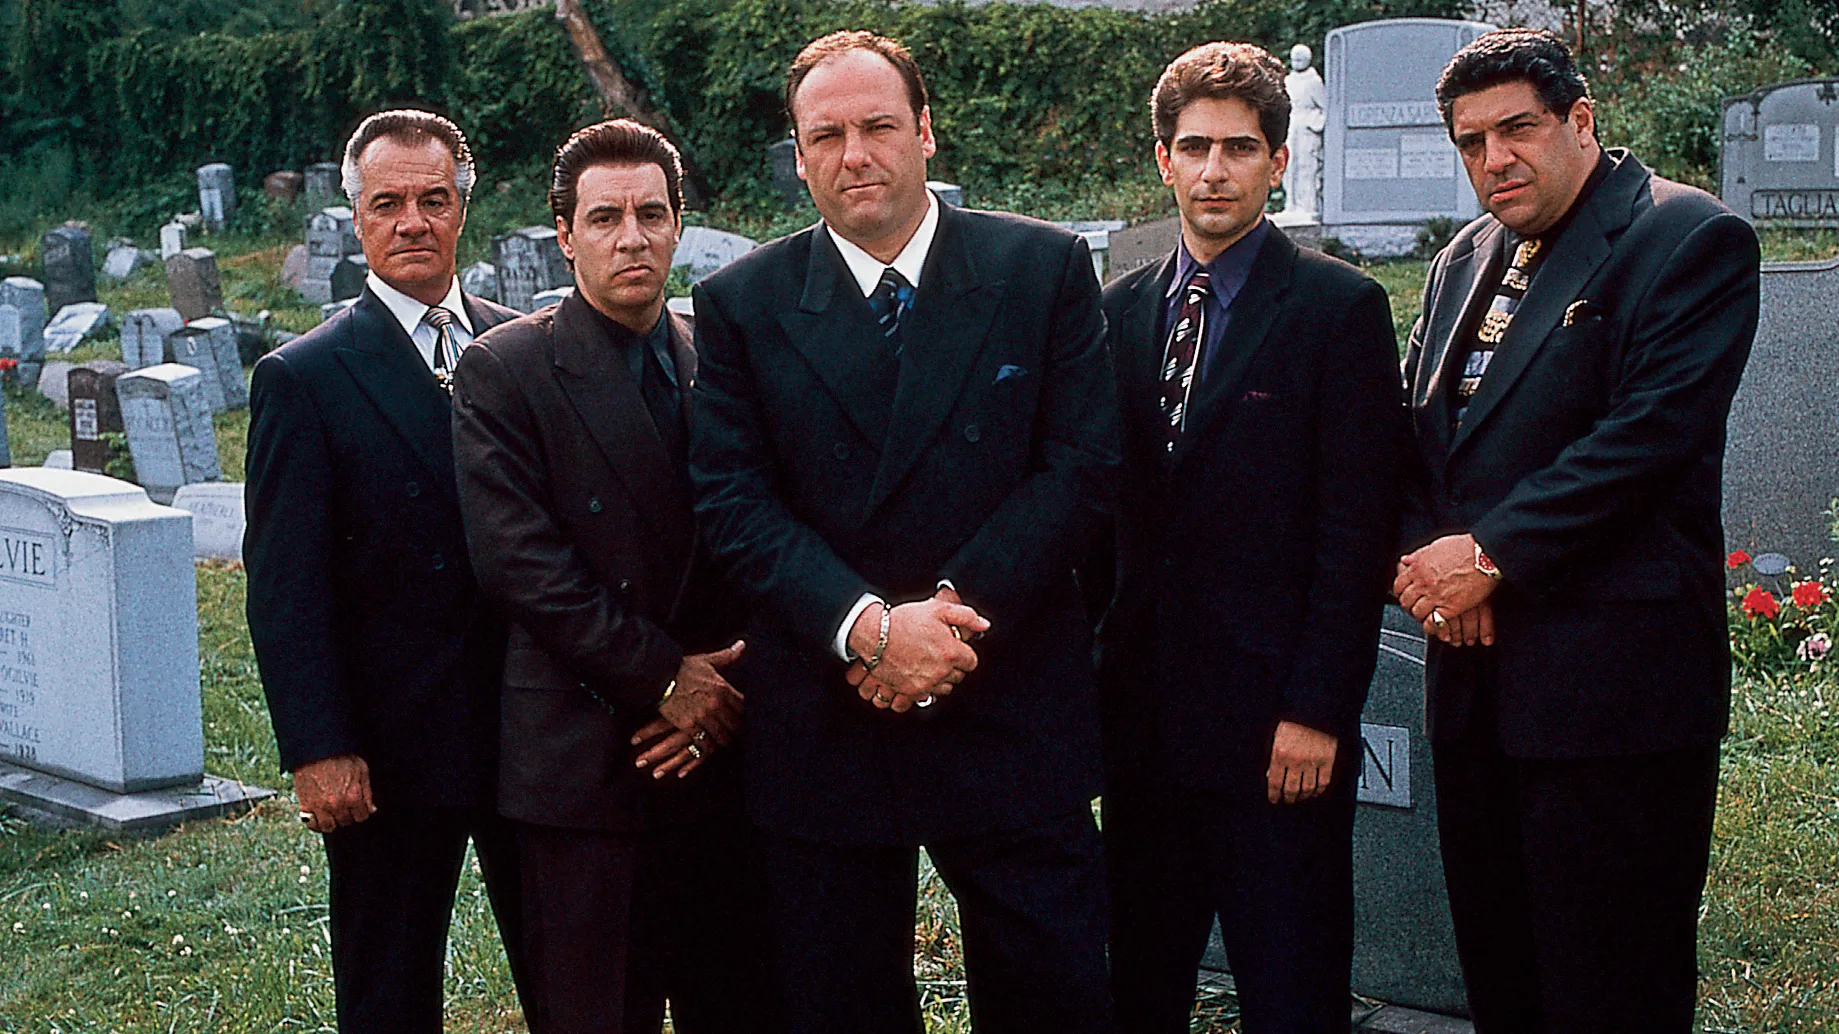 The Unseen Sopranos: An Atlantean Reflection on Tony Soprano’s Reign of Power